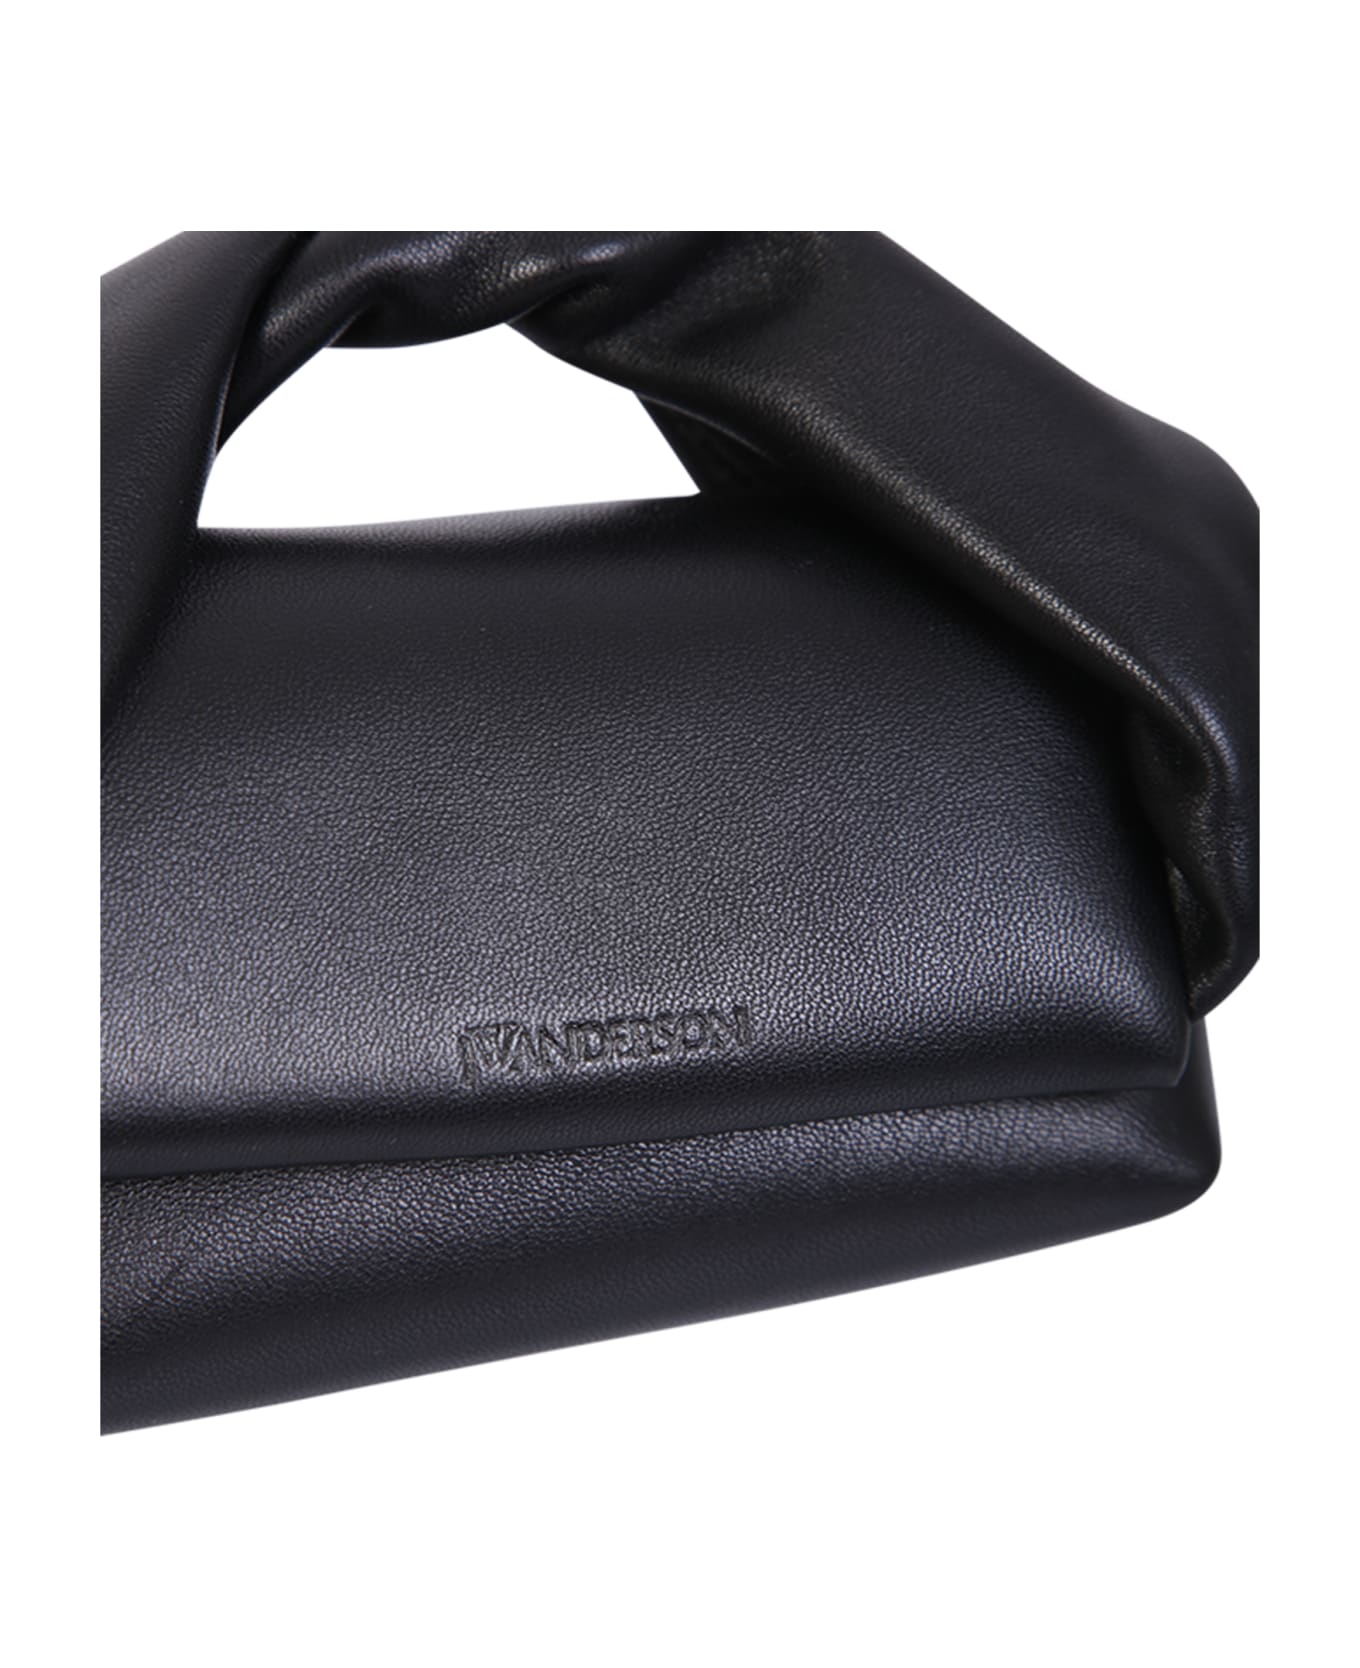 J.W. Anderson Black Leather Twister Mini Bag - BLACK